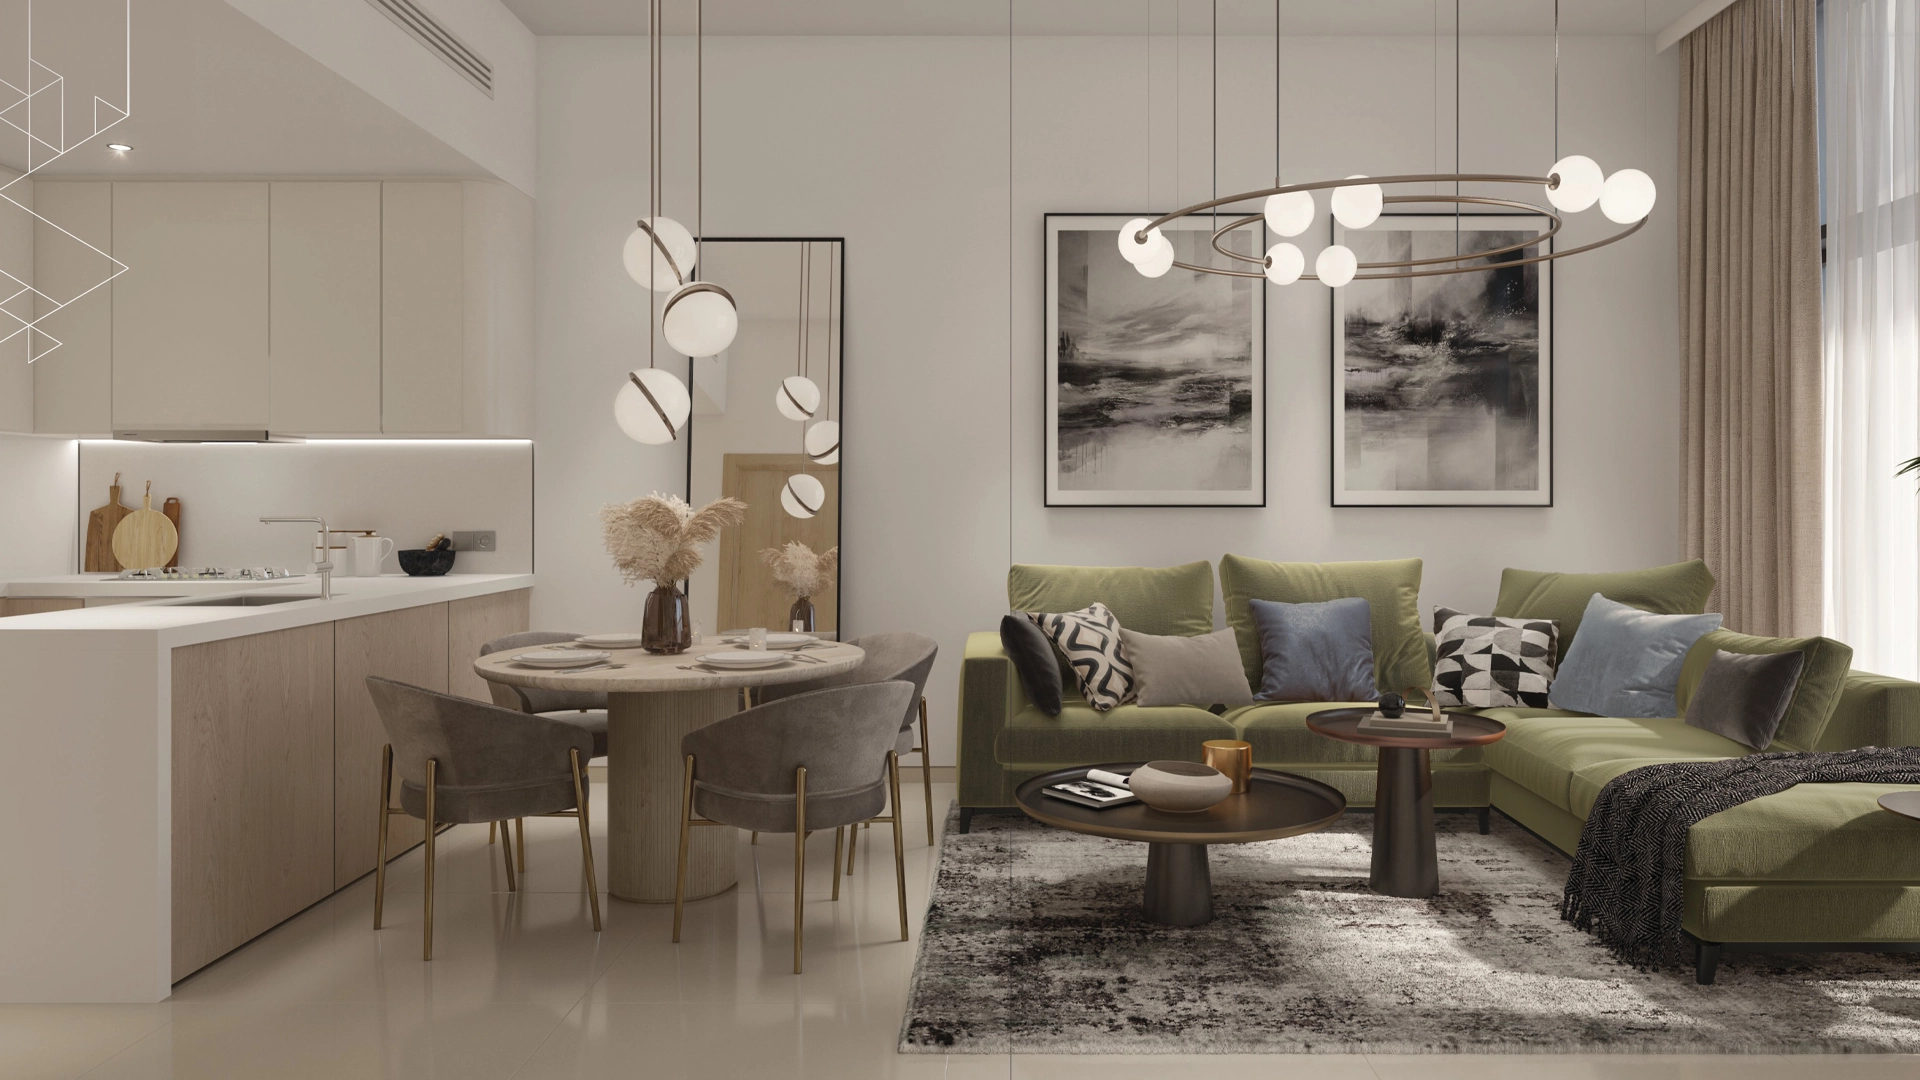 Edge-Realty-شقة غرفة نوم واحدة للبيع في مجمع جنات في مدينة دبي للإنتاج